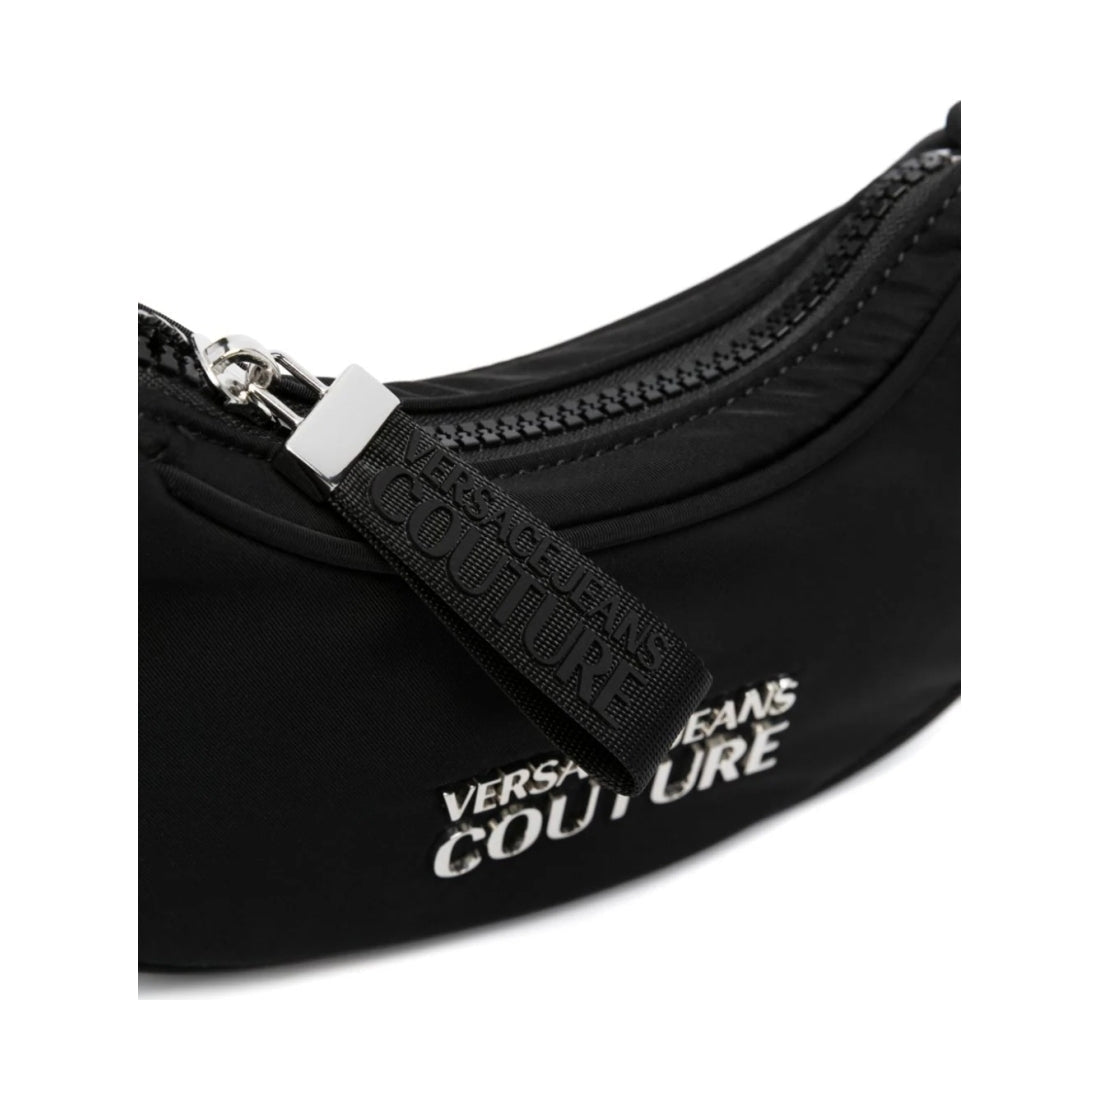 Versace Jeans Couture womens black sporty logo hobo bag | Vilbury London